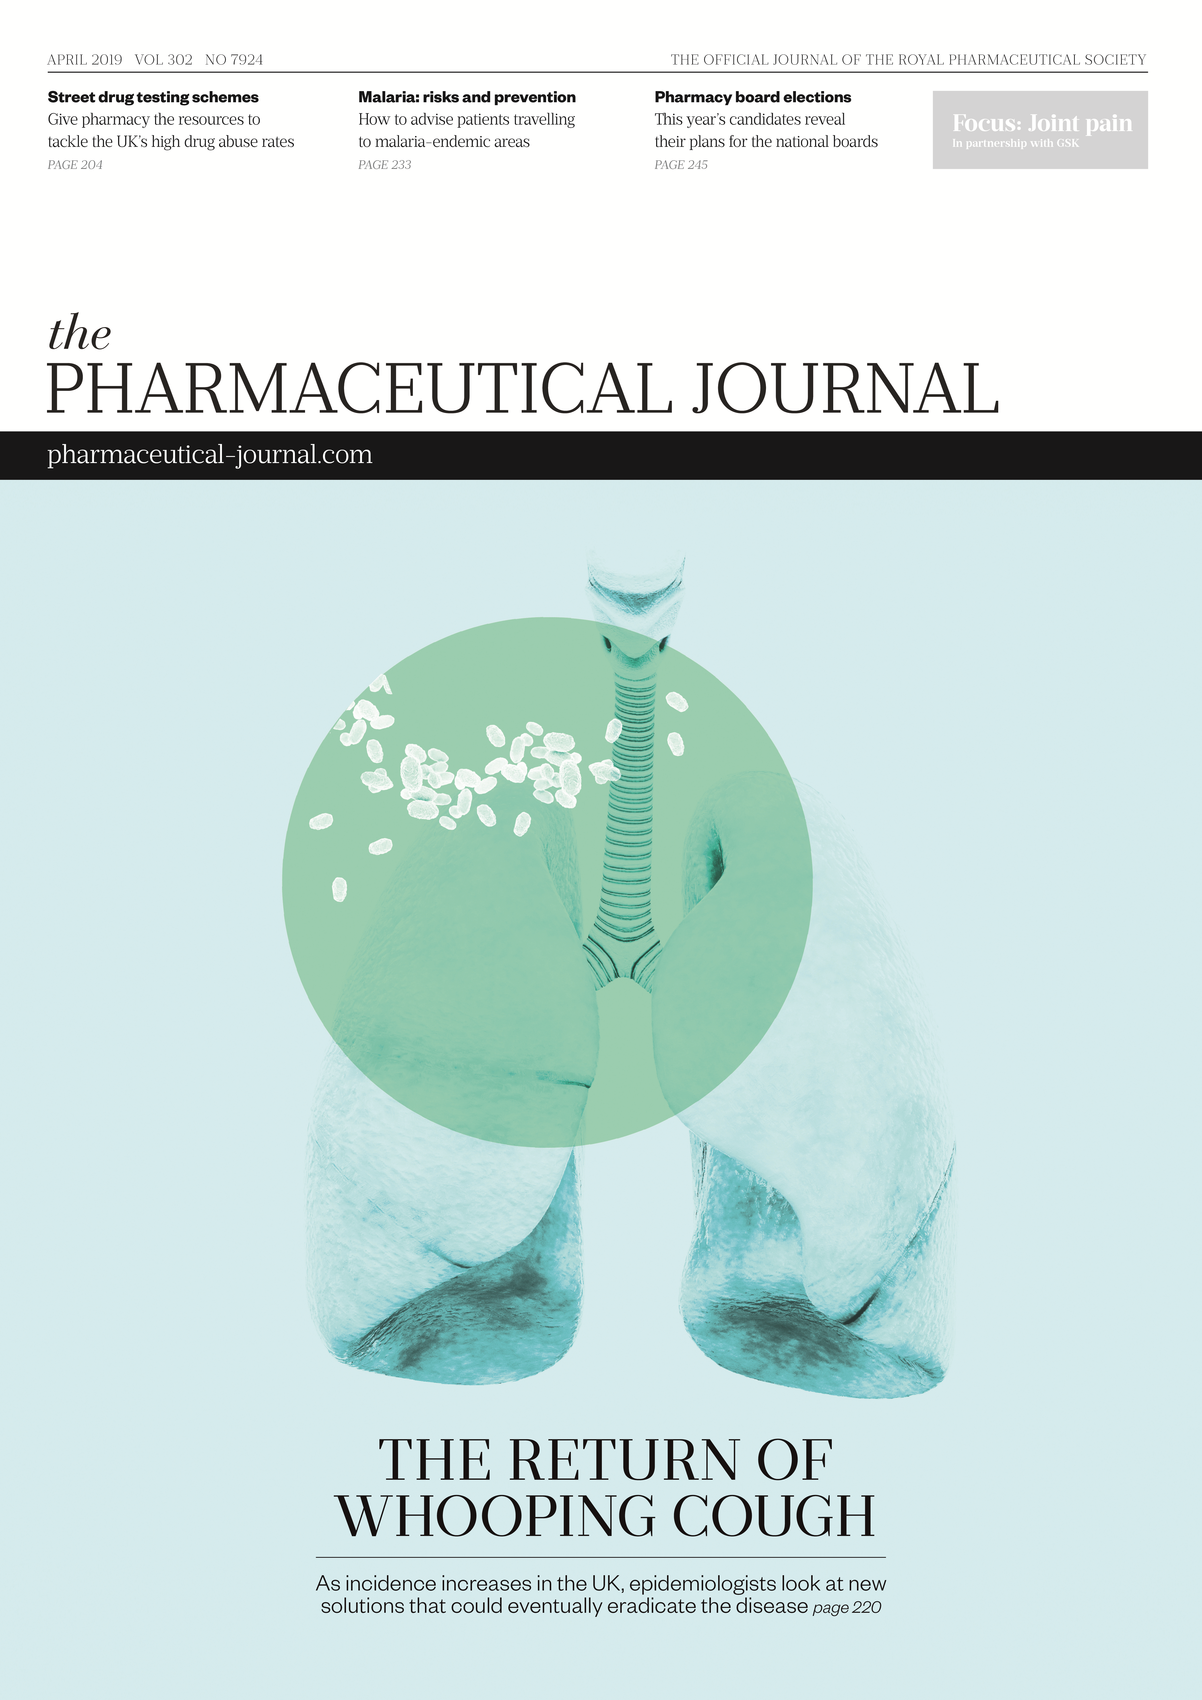 Publication issue cover for PJ, April 2019, Vol 302, No 7924